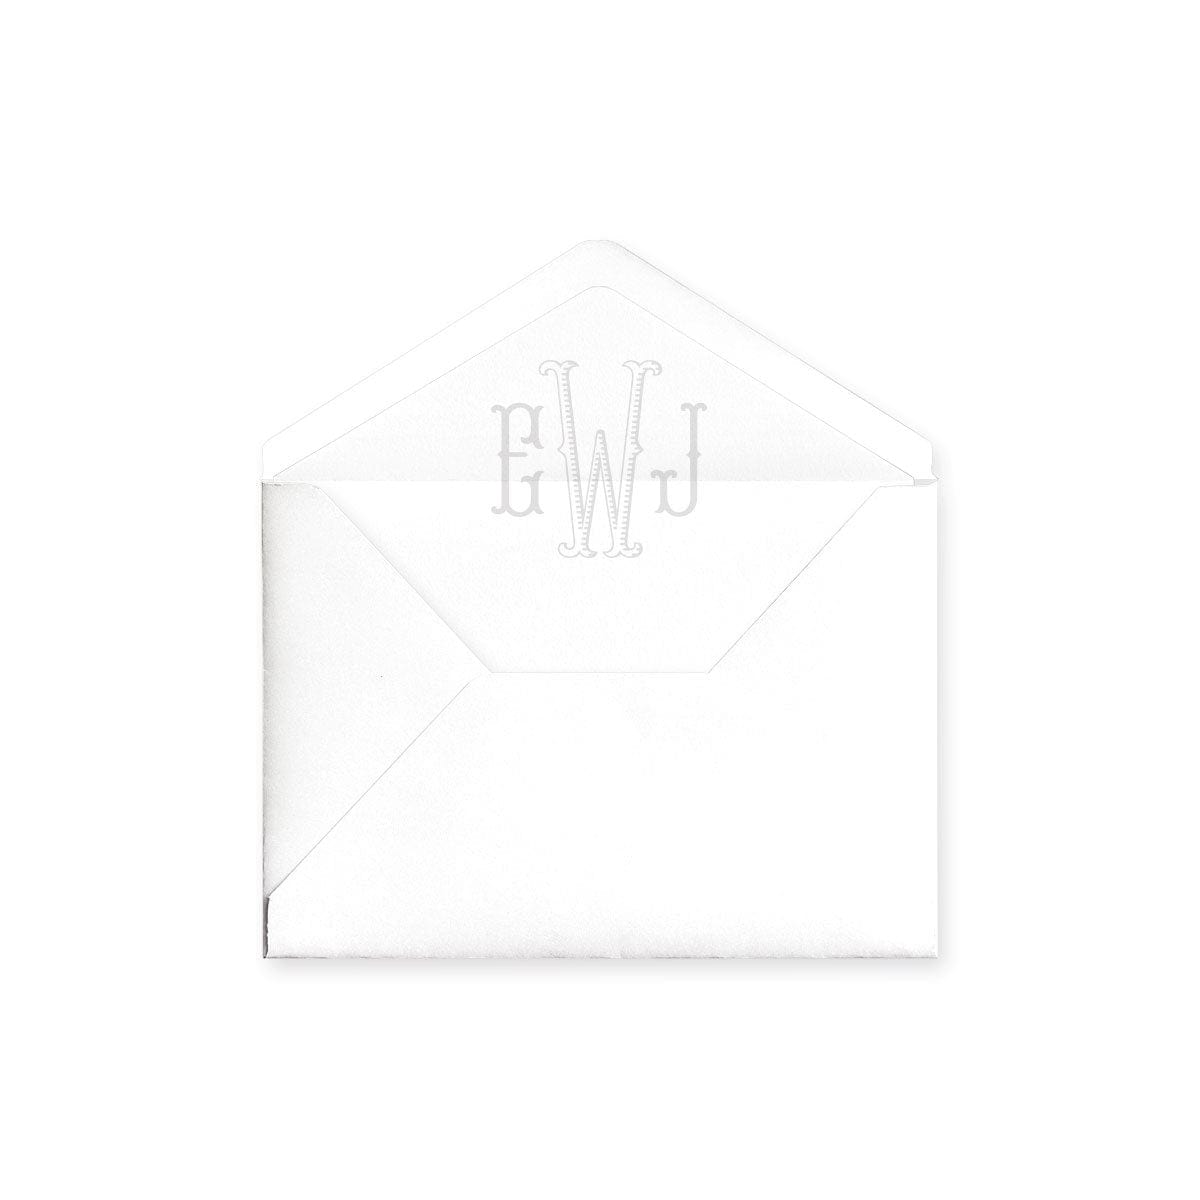 Monogram Envelope Liner